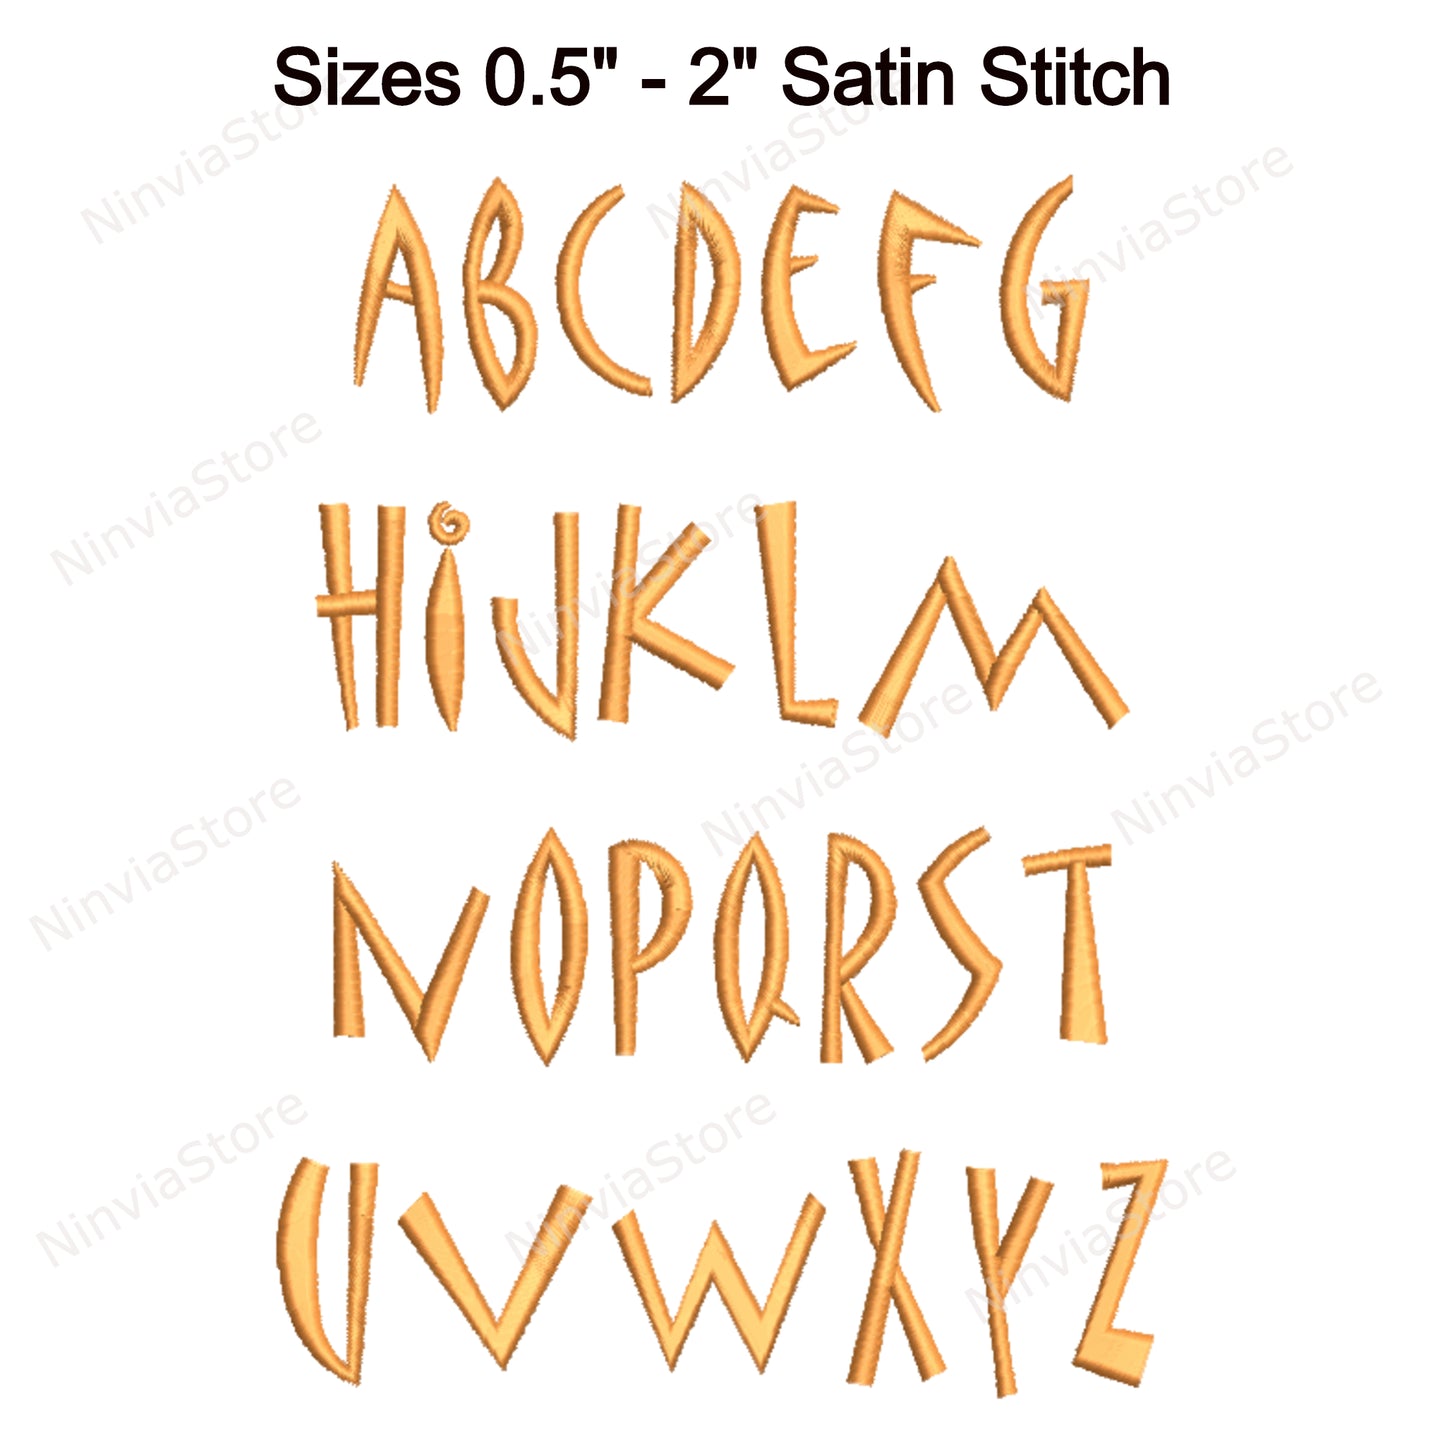 Greece Machine Embroidery Font, 14 sizes, 8 formats, BX Font, PE font, Monogram Alphabet Embroidery Designs